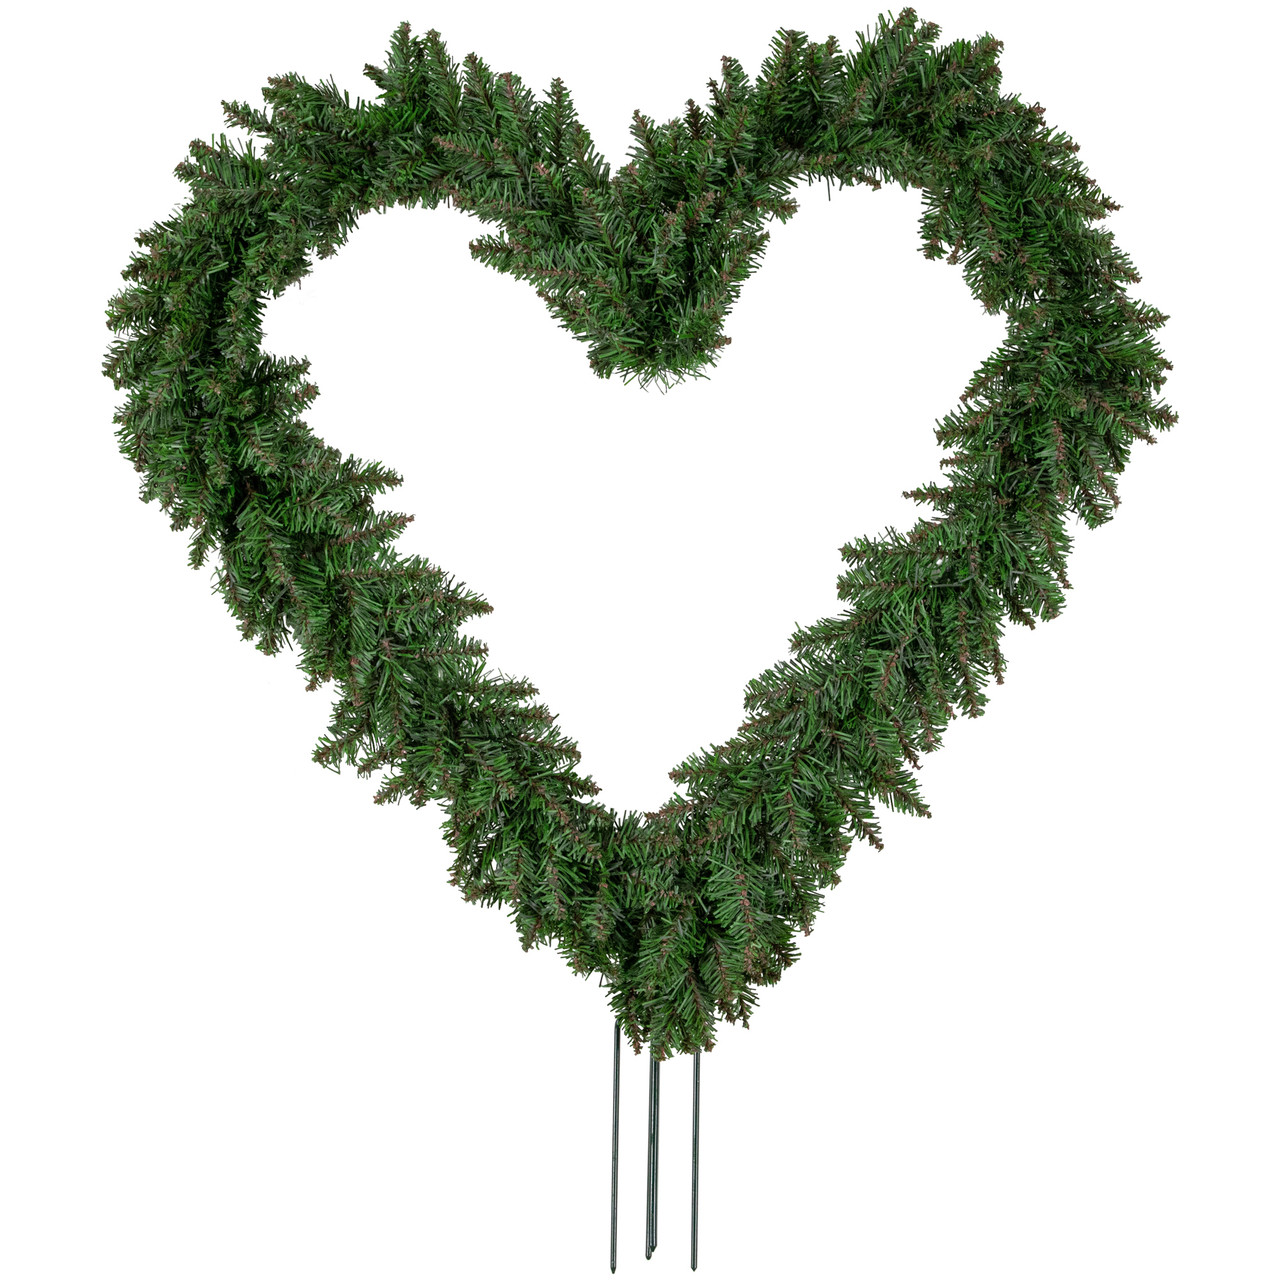  Heart-Shaped Wreath  Heart-Shaped Artificial Romantic